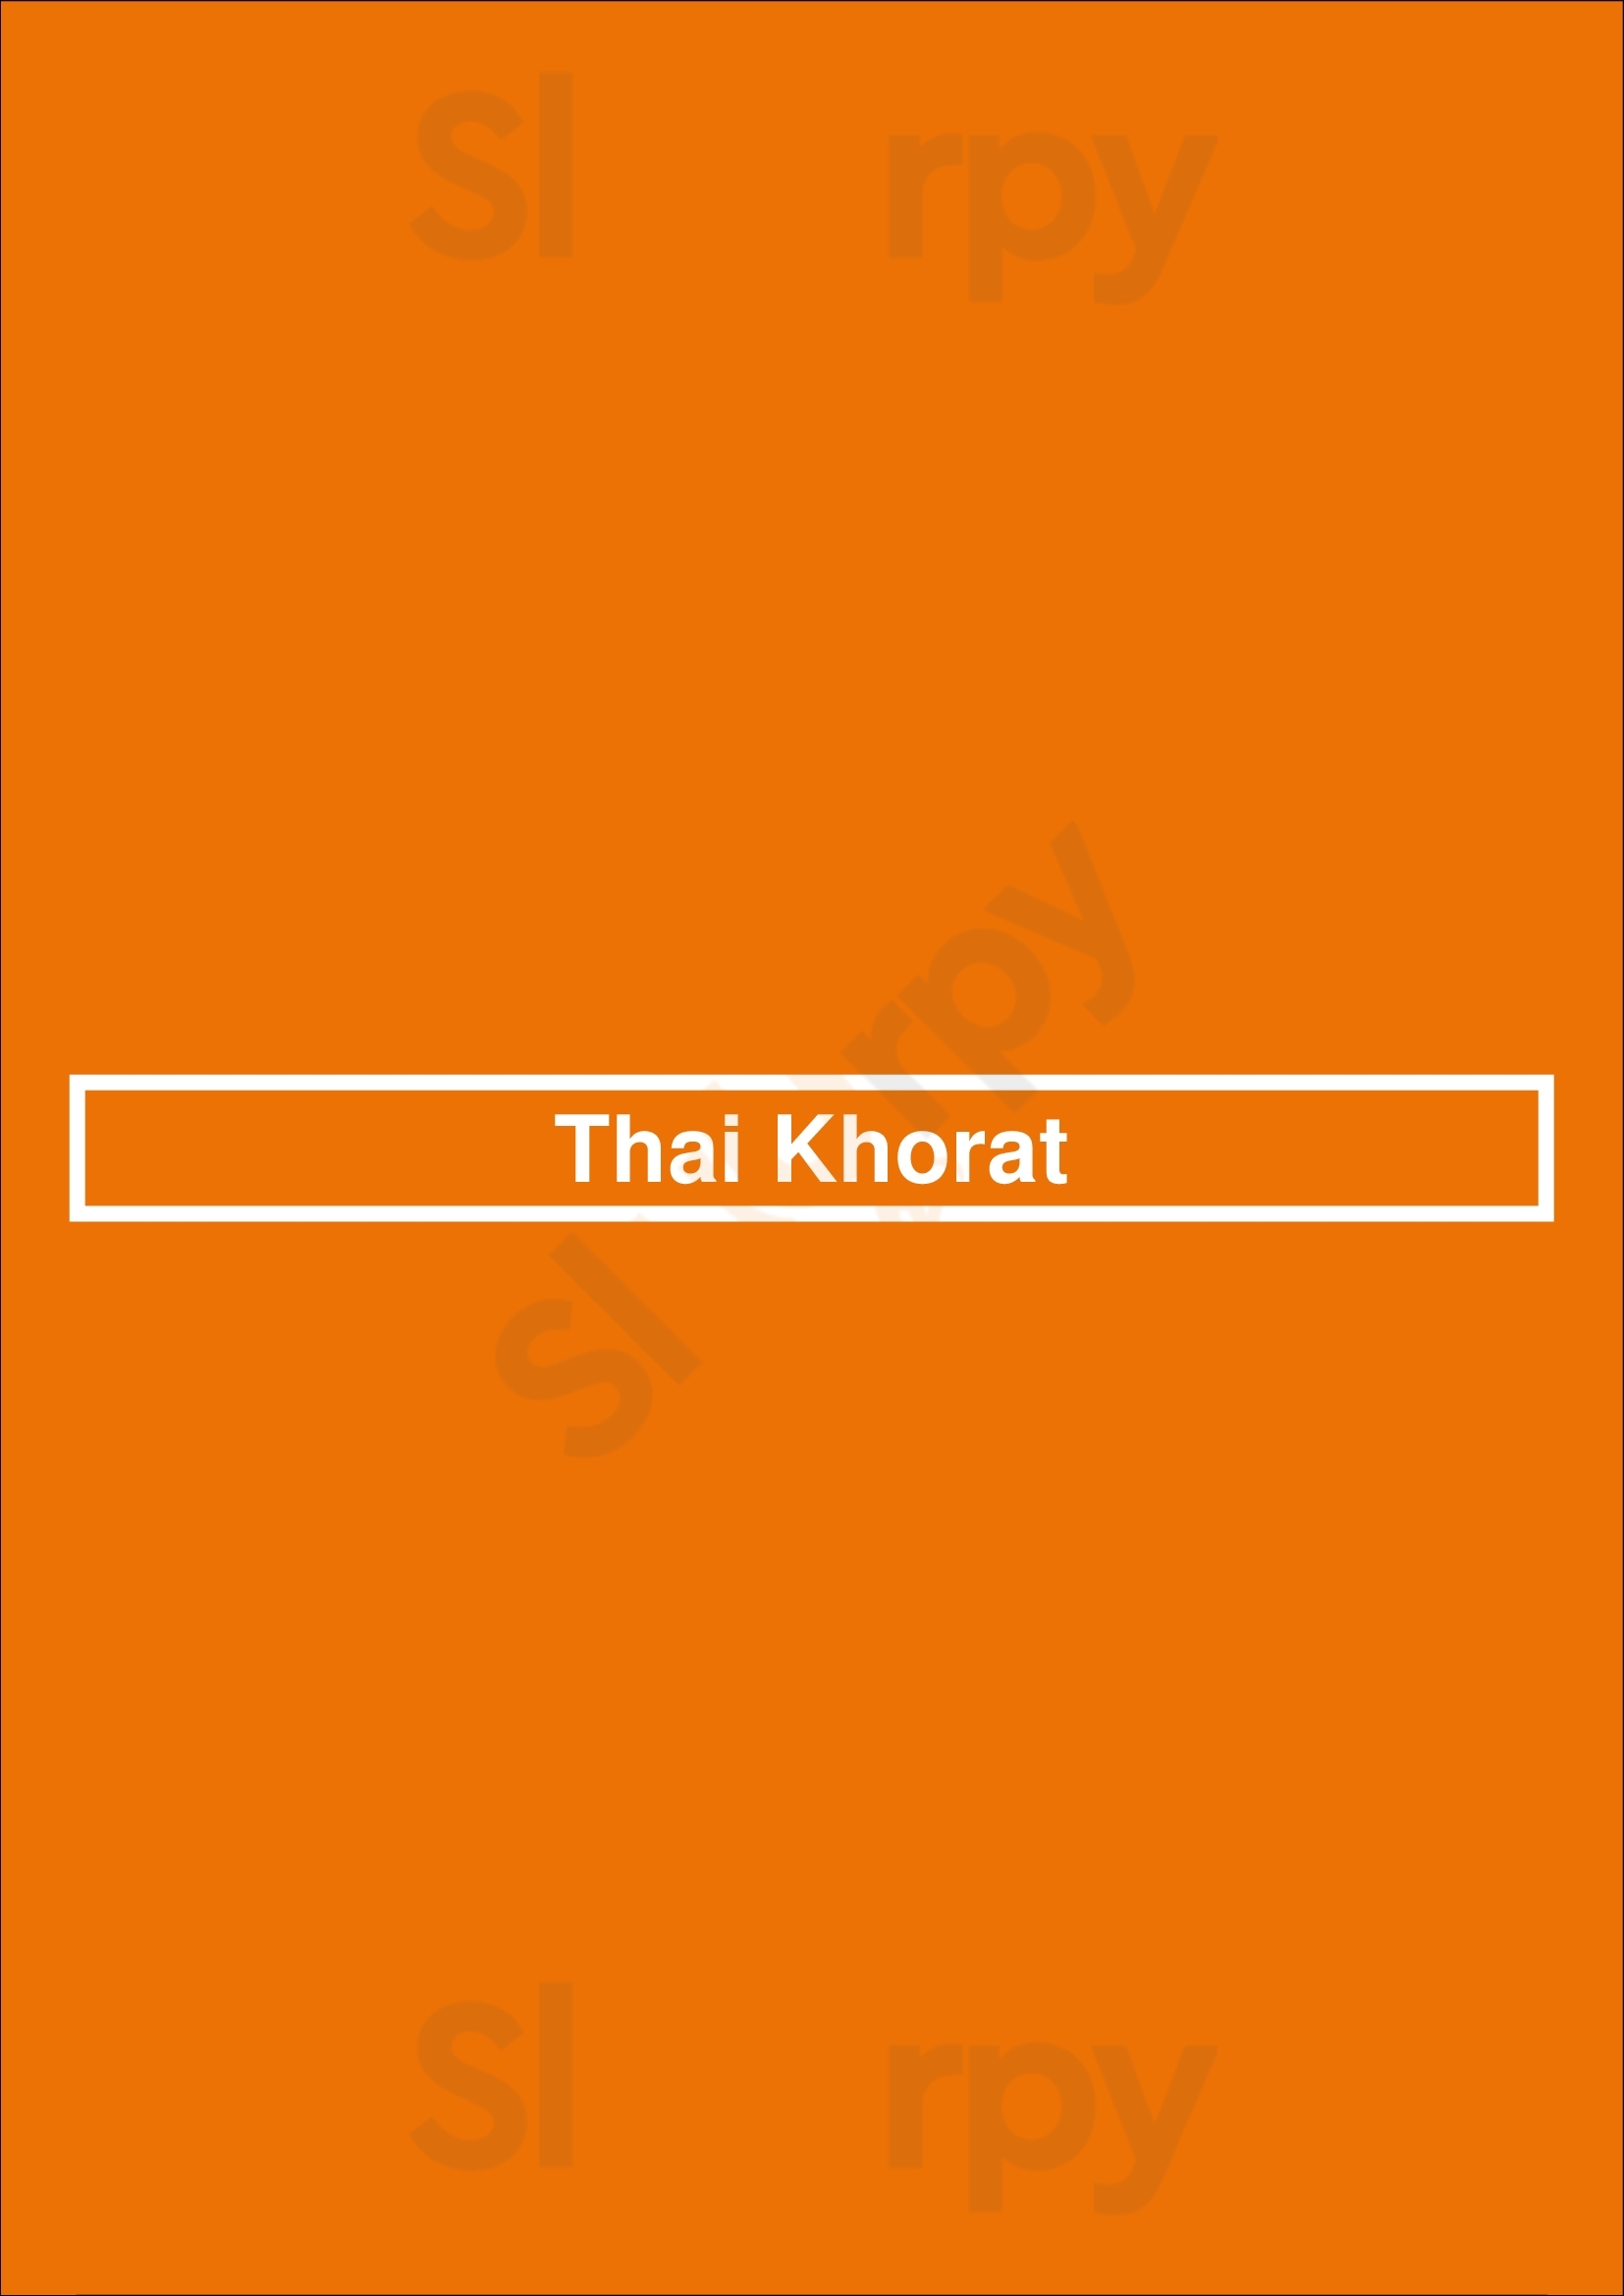 Thai Khorat Amsterdam Menu - 1